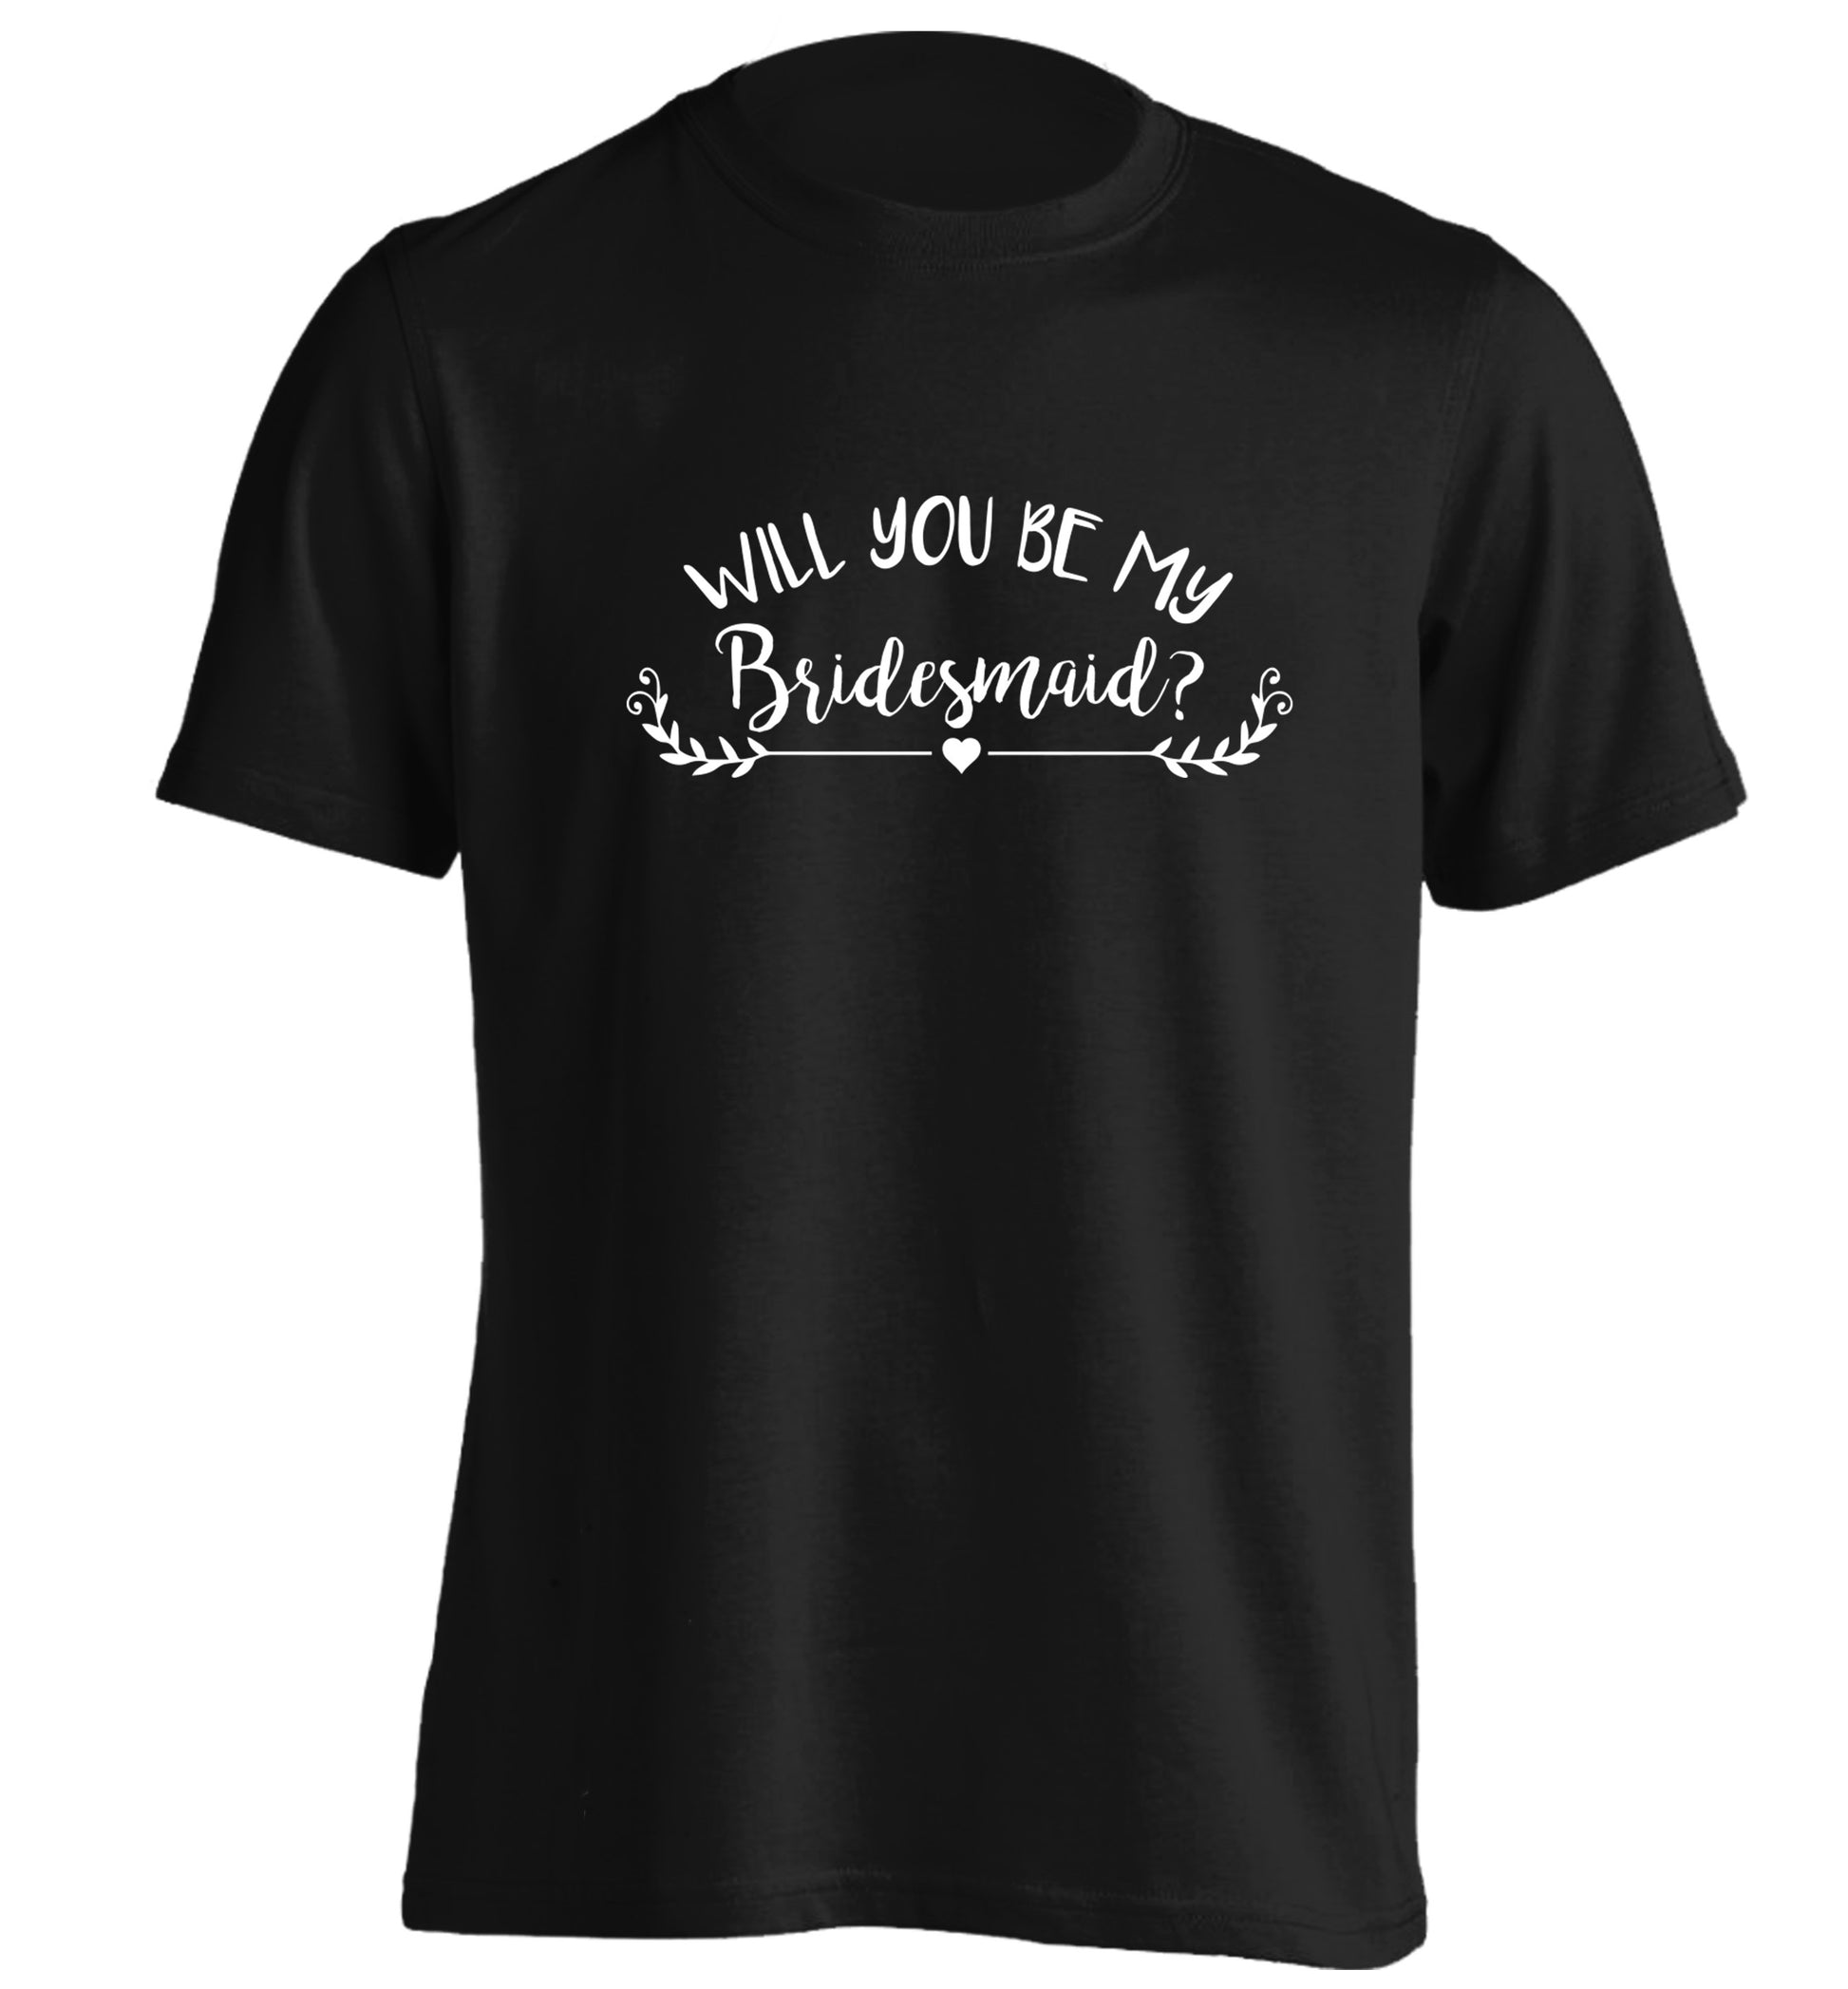 Will you be my bridesmaid? adults unisex black Tshirt 2XL